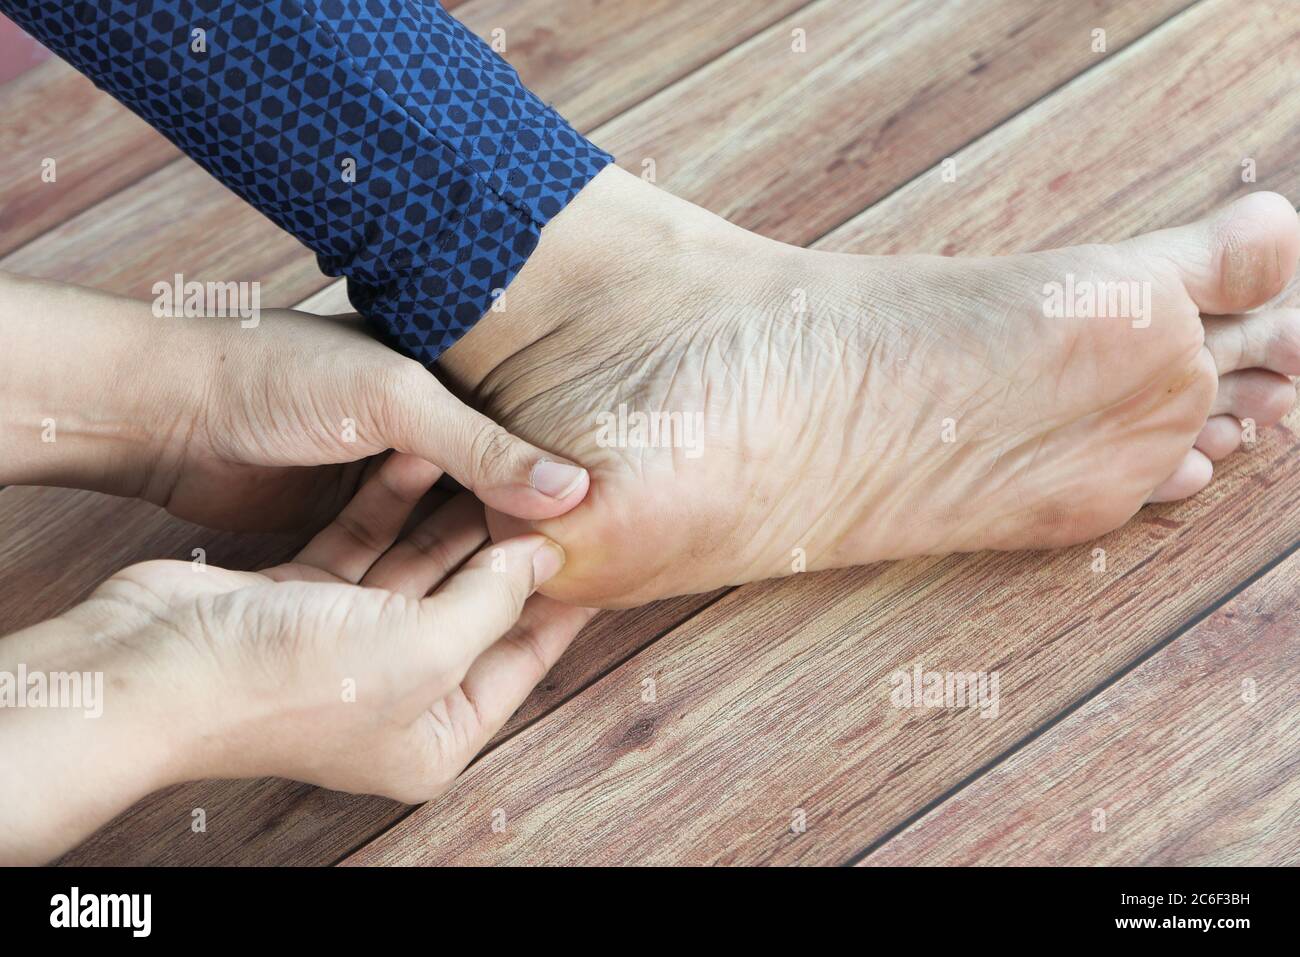 Close up on women feet and hand massage on injury spot. Stock Photo